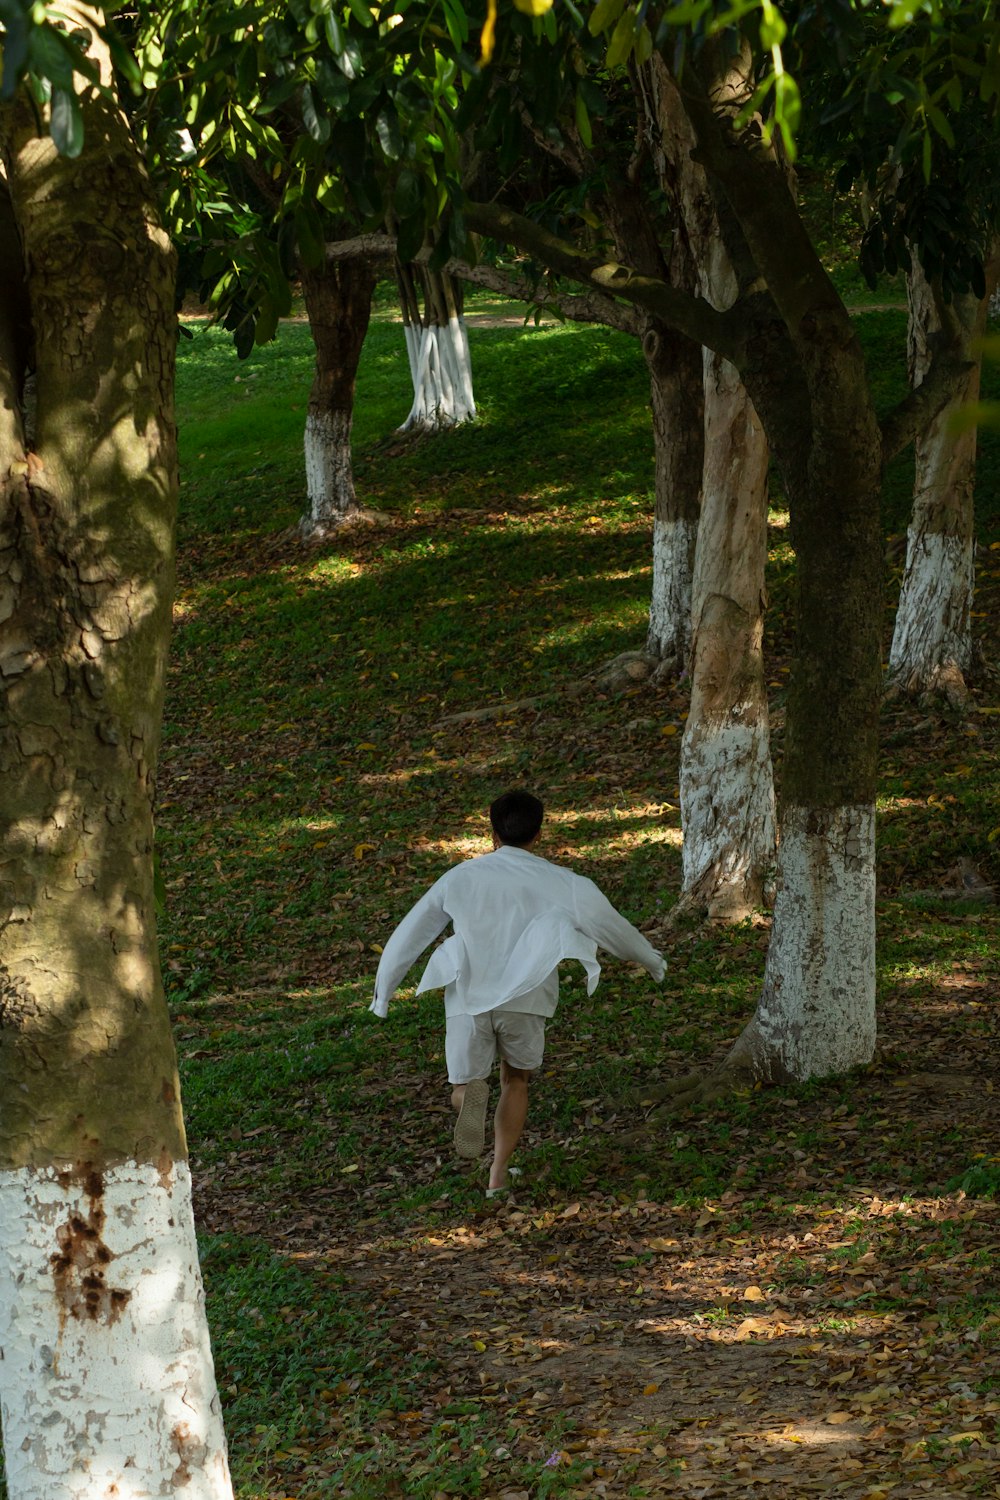 a man walking through a park next to trees